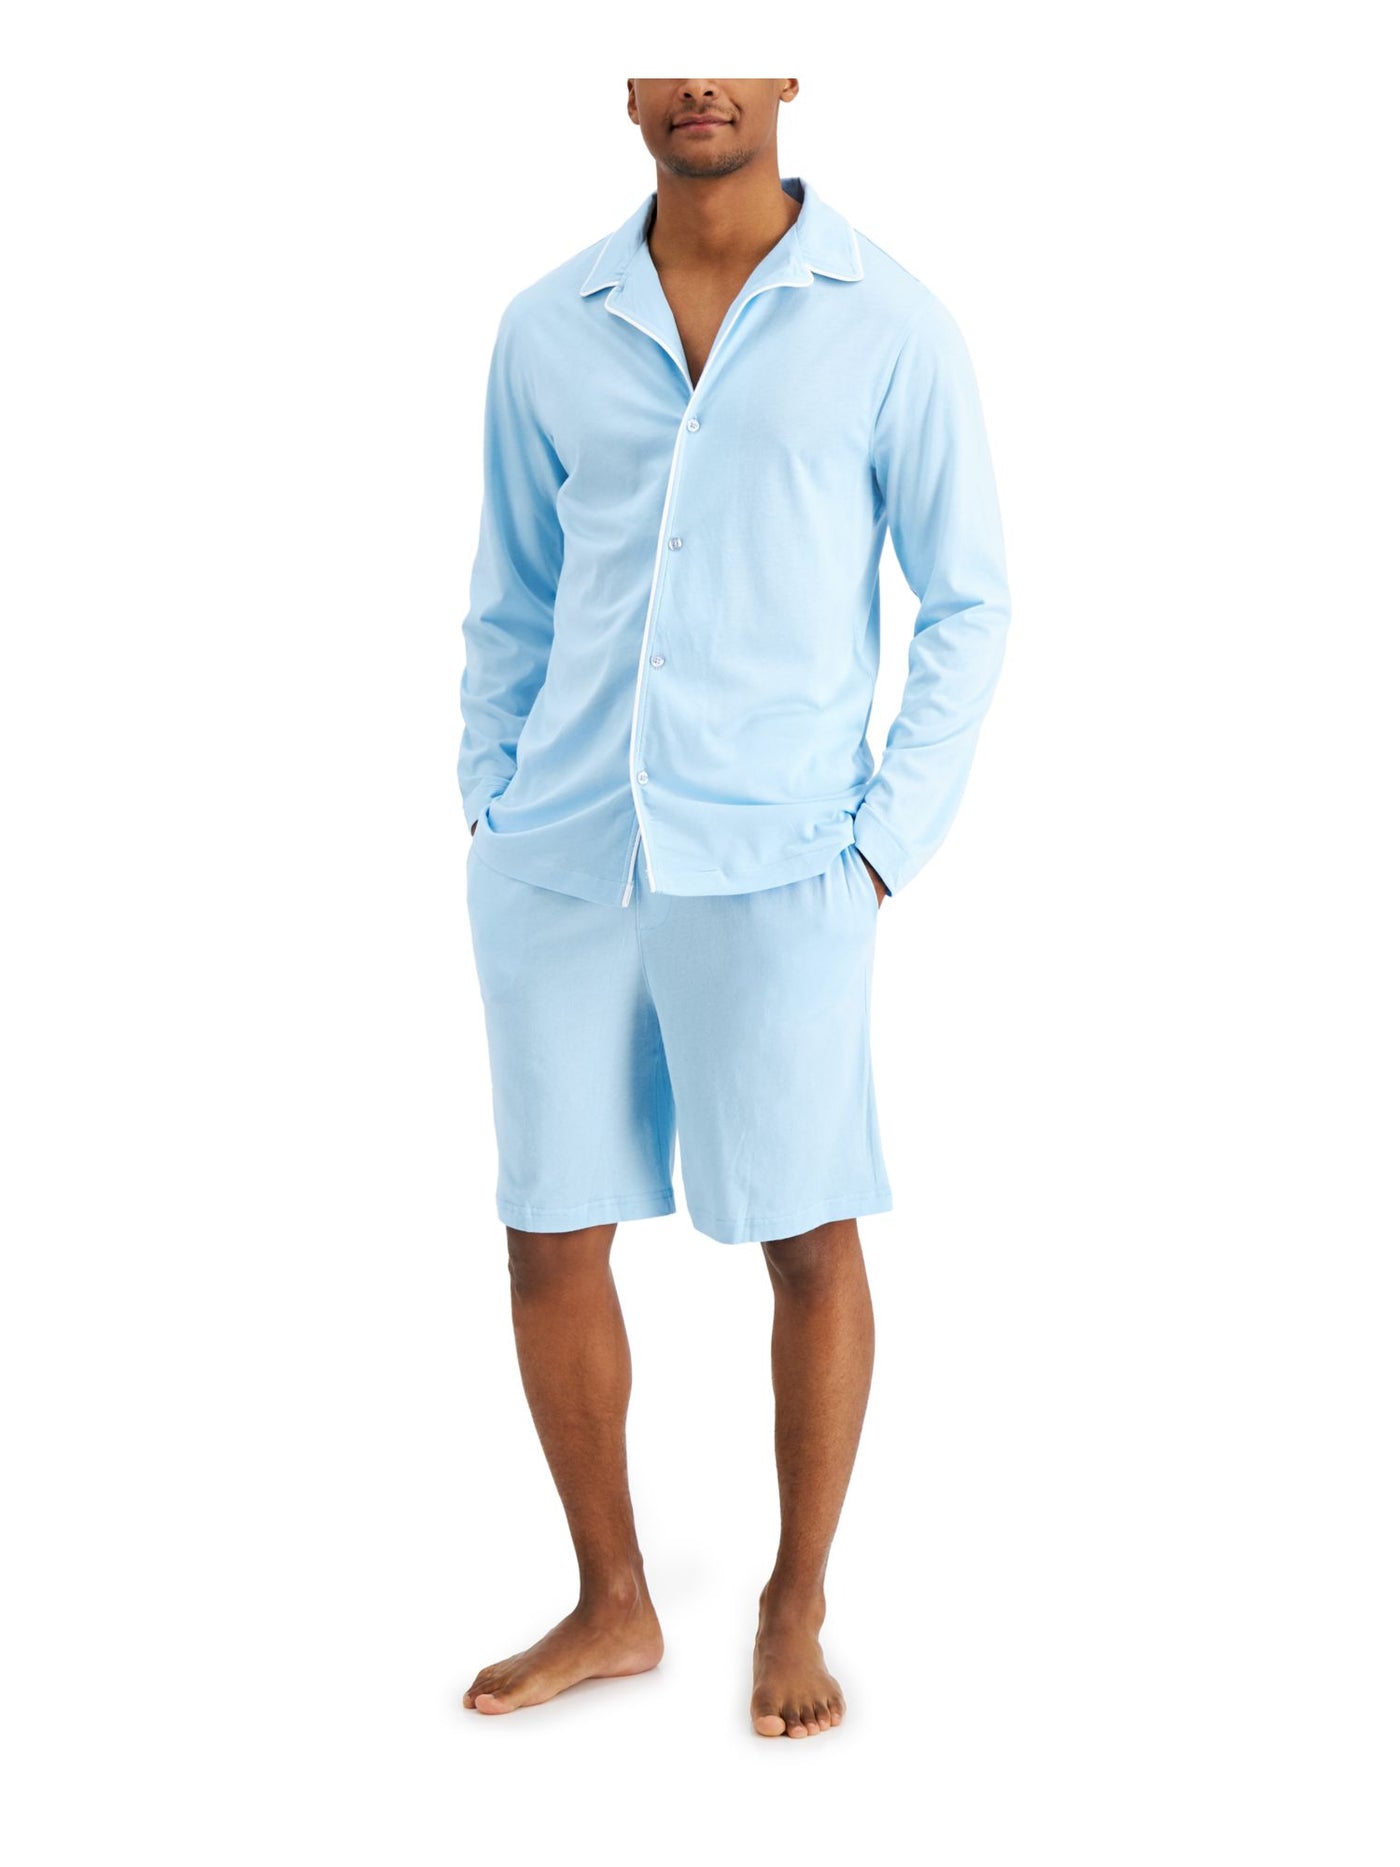 CLUBROOM Intimates Light Blue Notched Collar Sleep Shirt Pajama Top XL